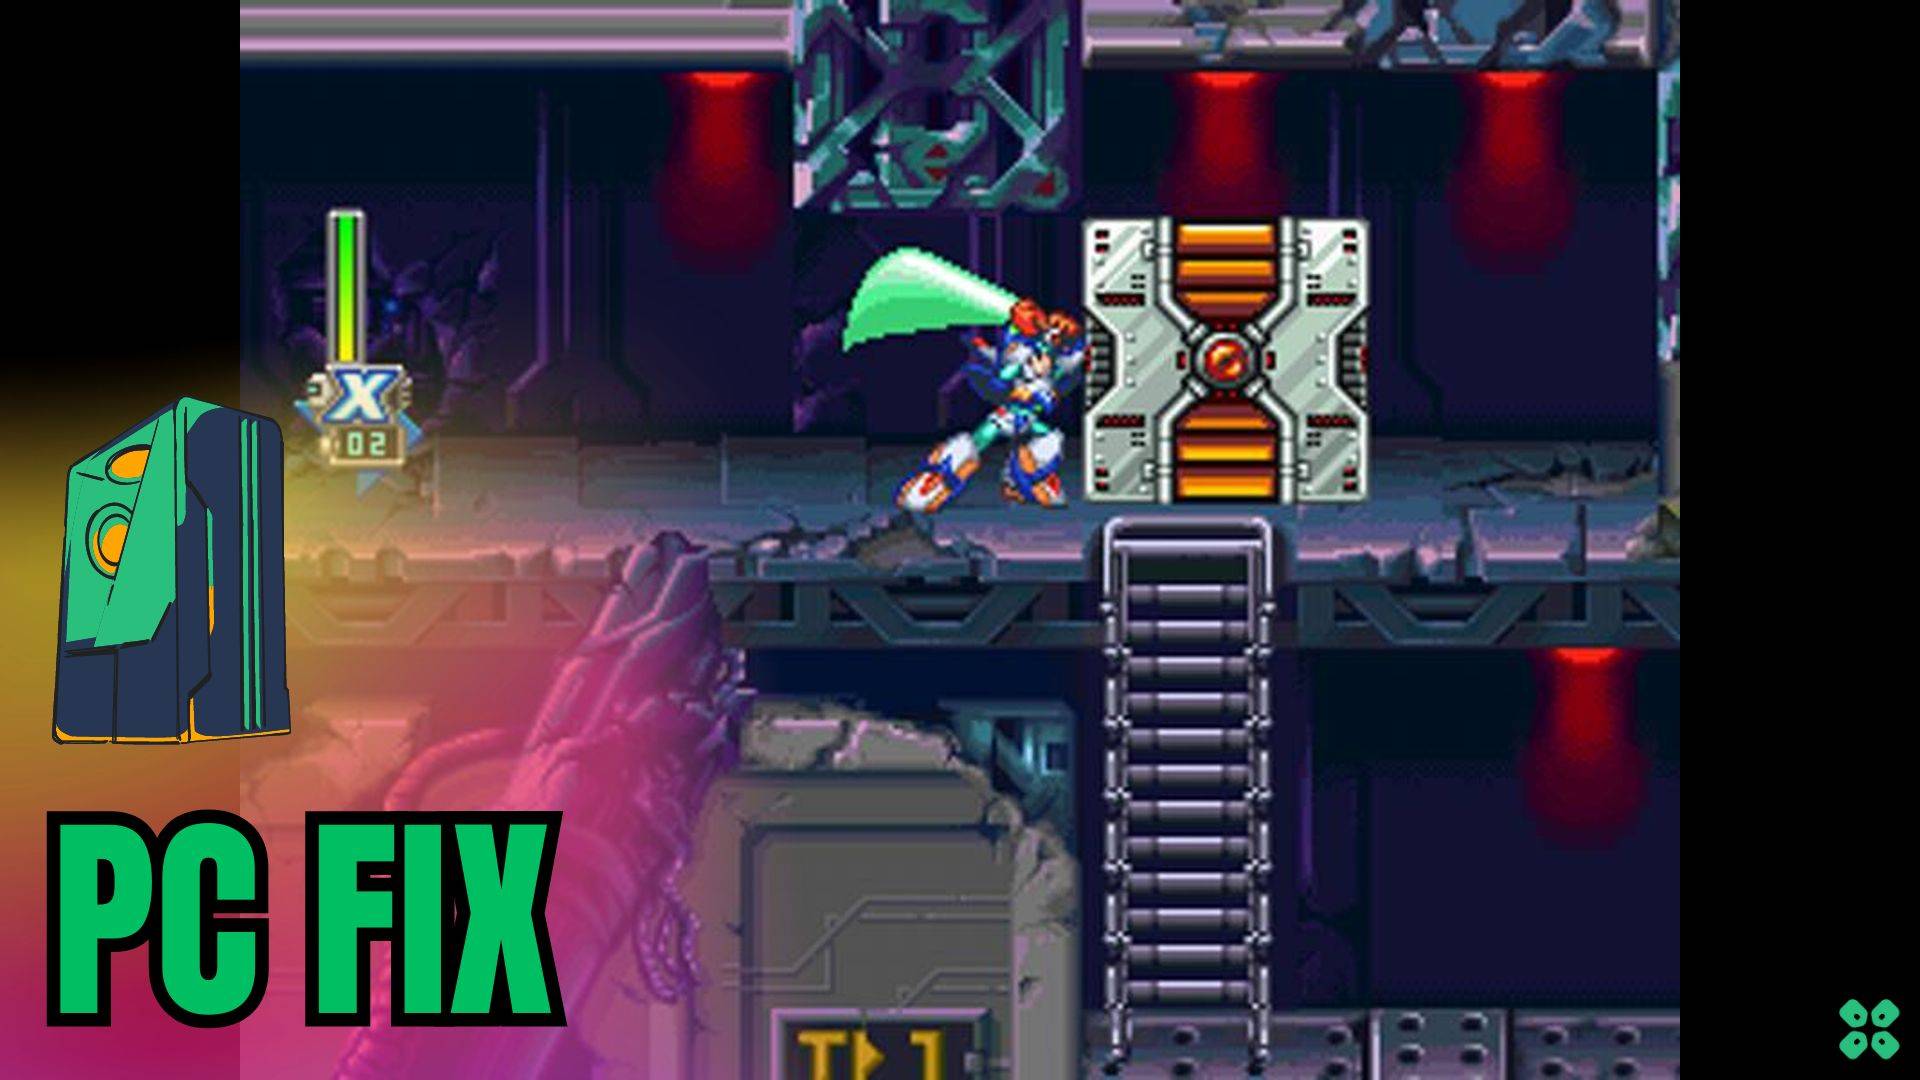 Artwork of Mega Man X6 and its fix of crashing by TCG